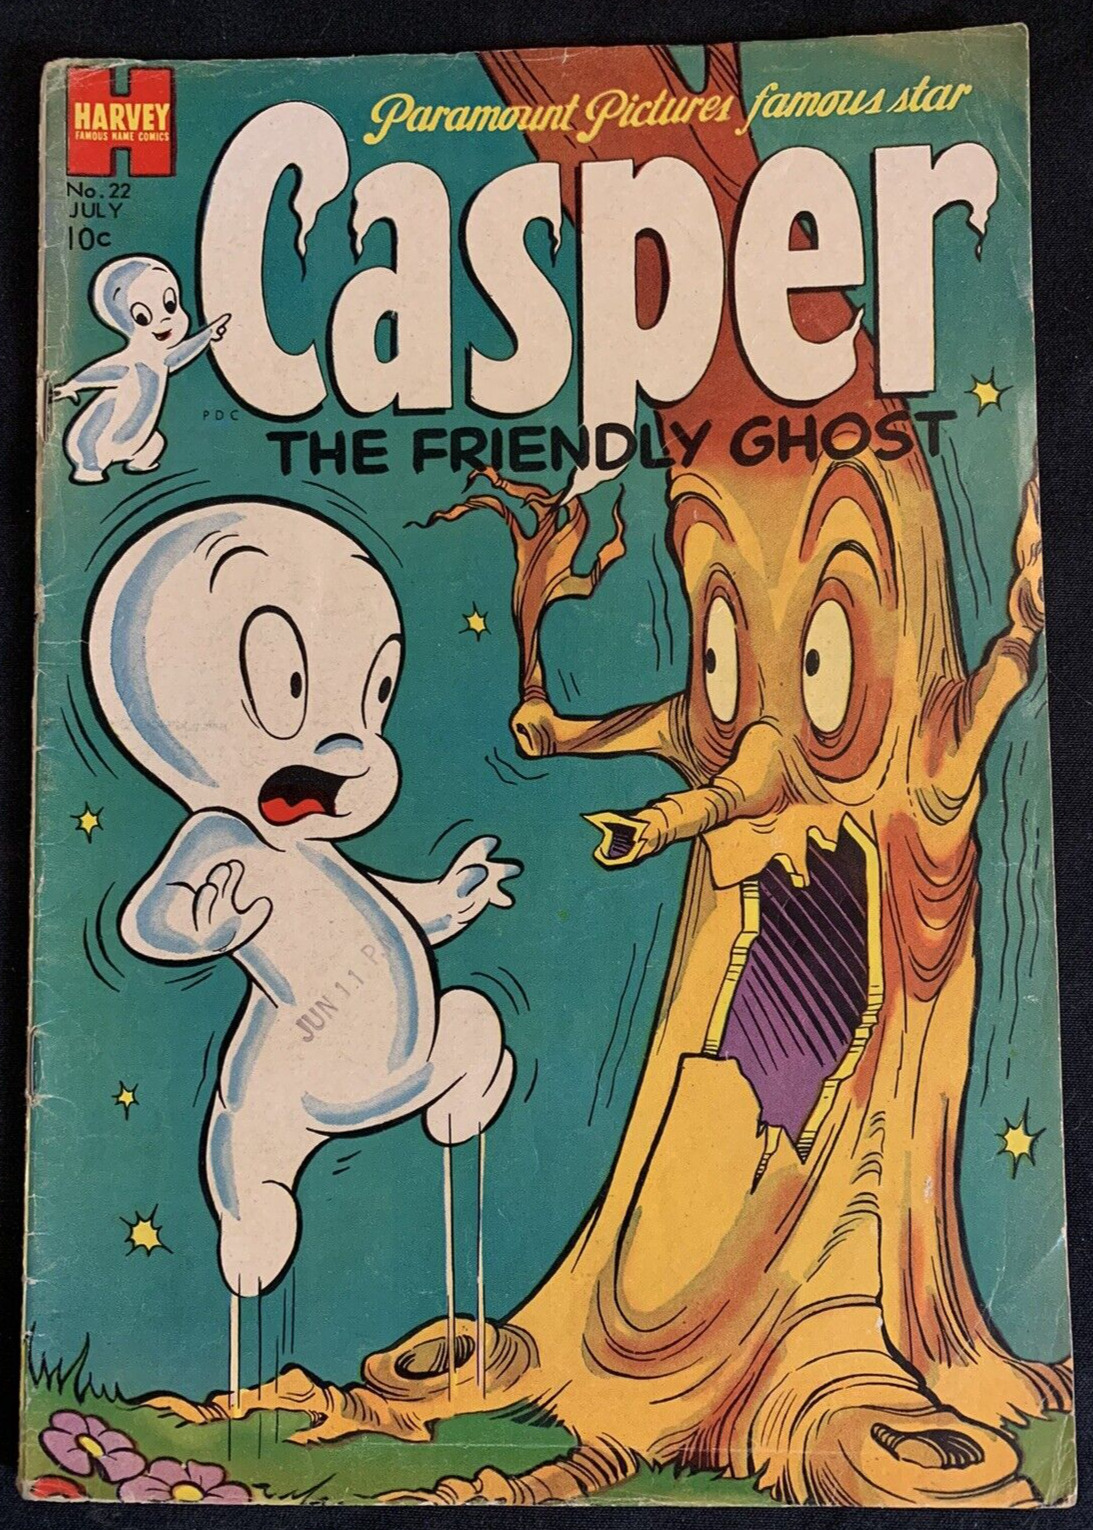 CASPER THE FRIENDLY GHOST #22 1954 HARVEY Comics Estate Sale Original Owner